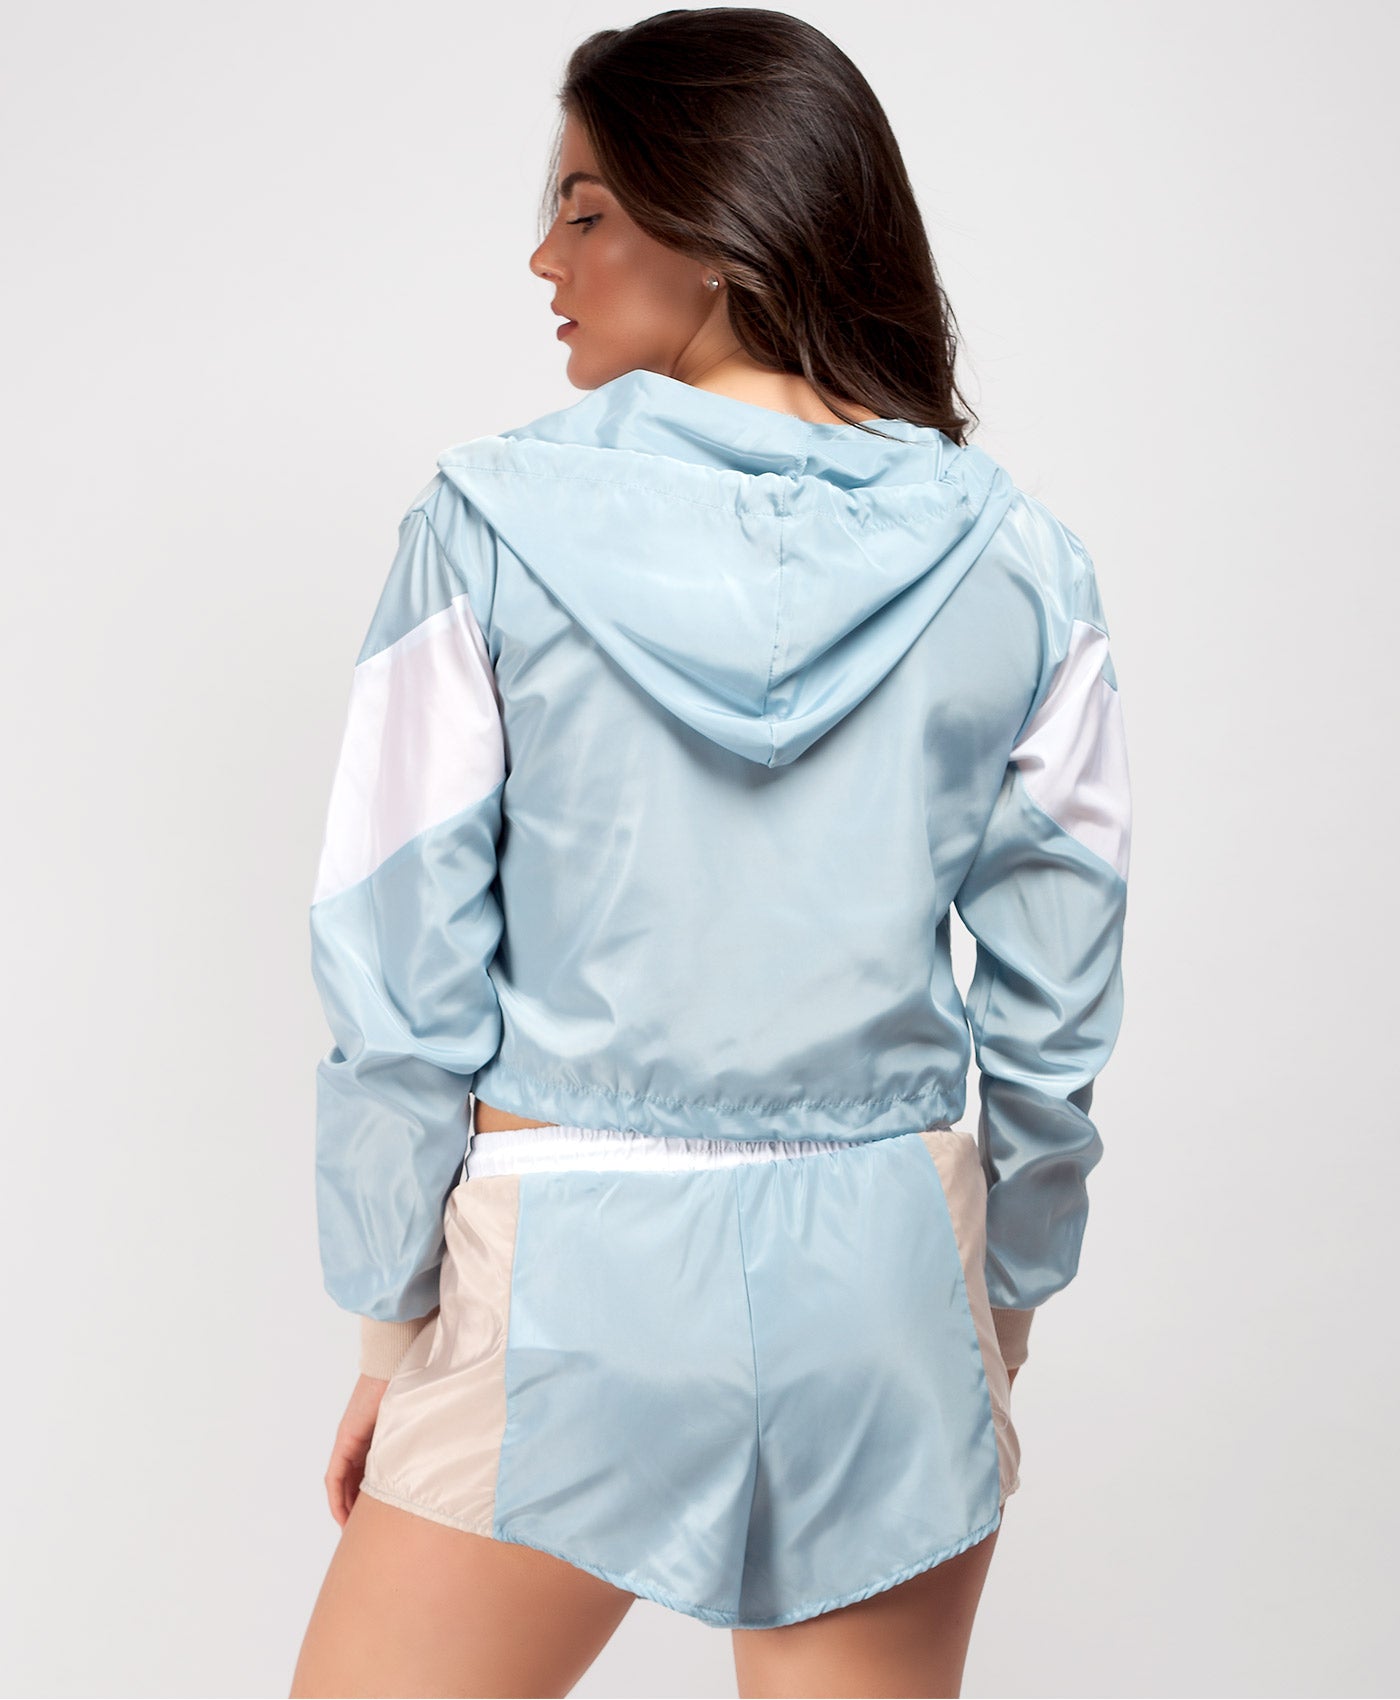 Blue-White-Colour-Block-Jacket-&-Shorts-Co-Ord-Set-3